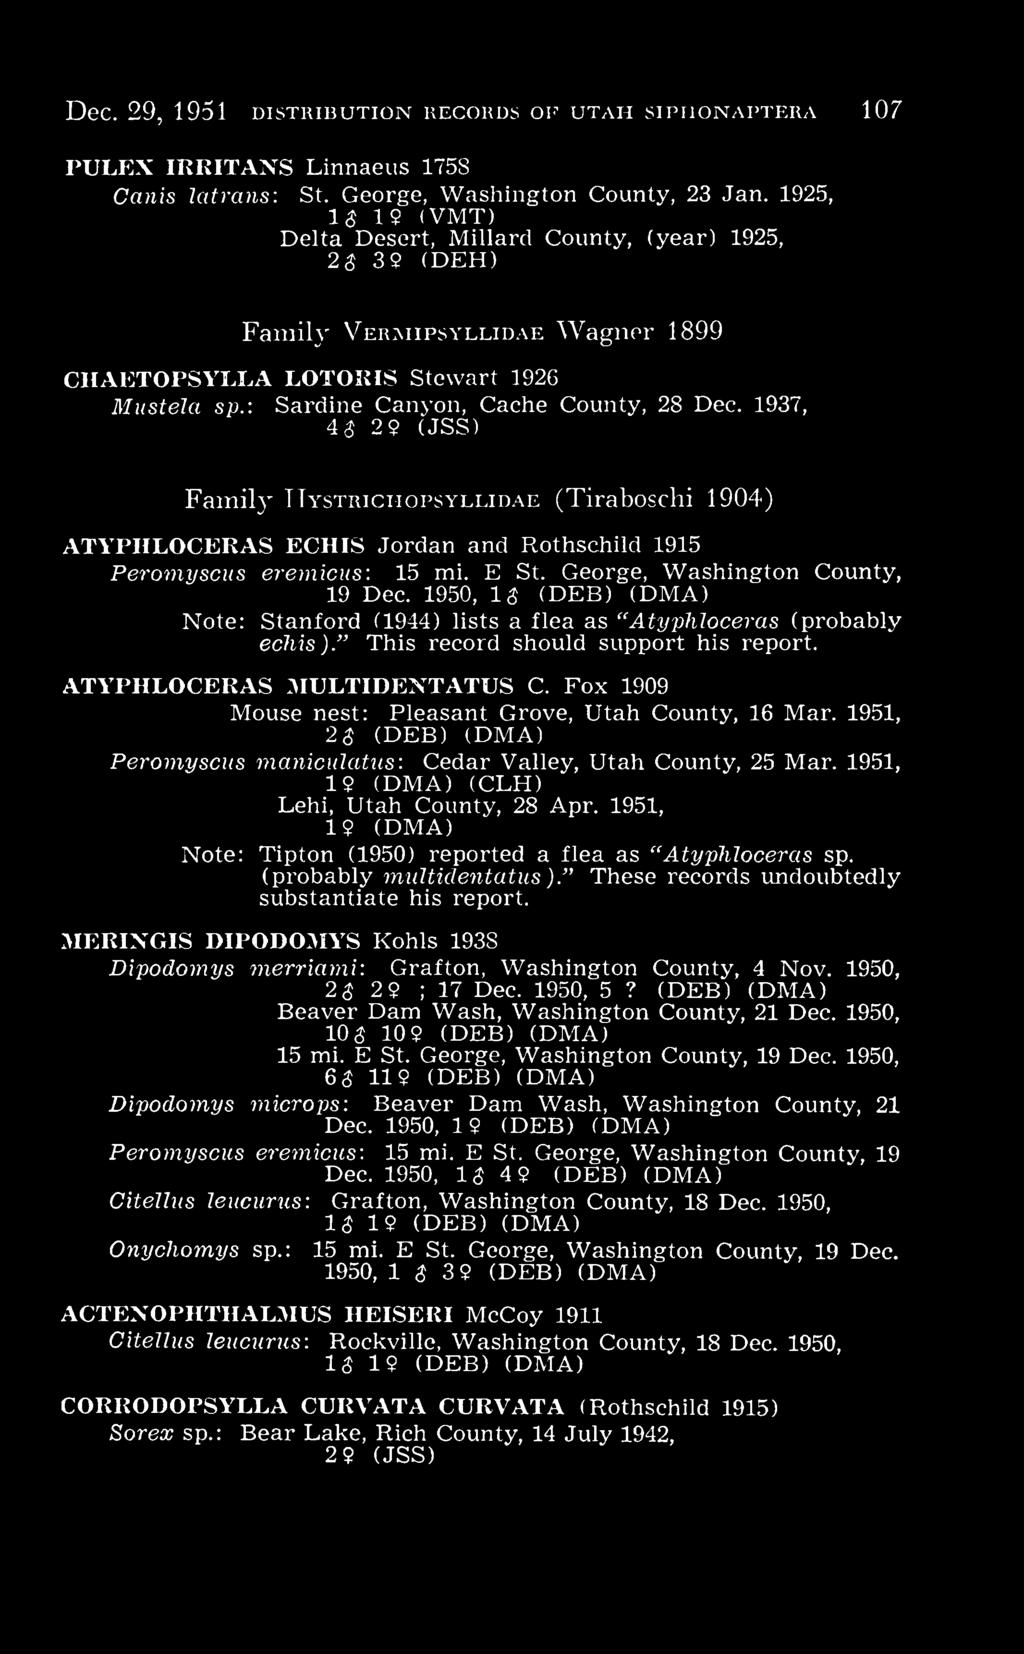 1937, 4$ 2 9 (JSS) Family Hystrichopsyllidae (Tiraboschi 1904) ATYPHLOCERAS ECHIS Jordan and Rothschild 1915 Peromyscus eremicus: 15 mi. E St. George, Washington County, 19 Dec.